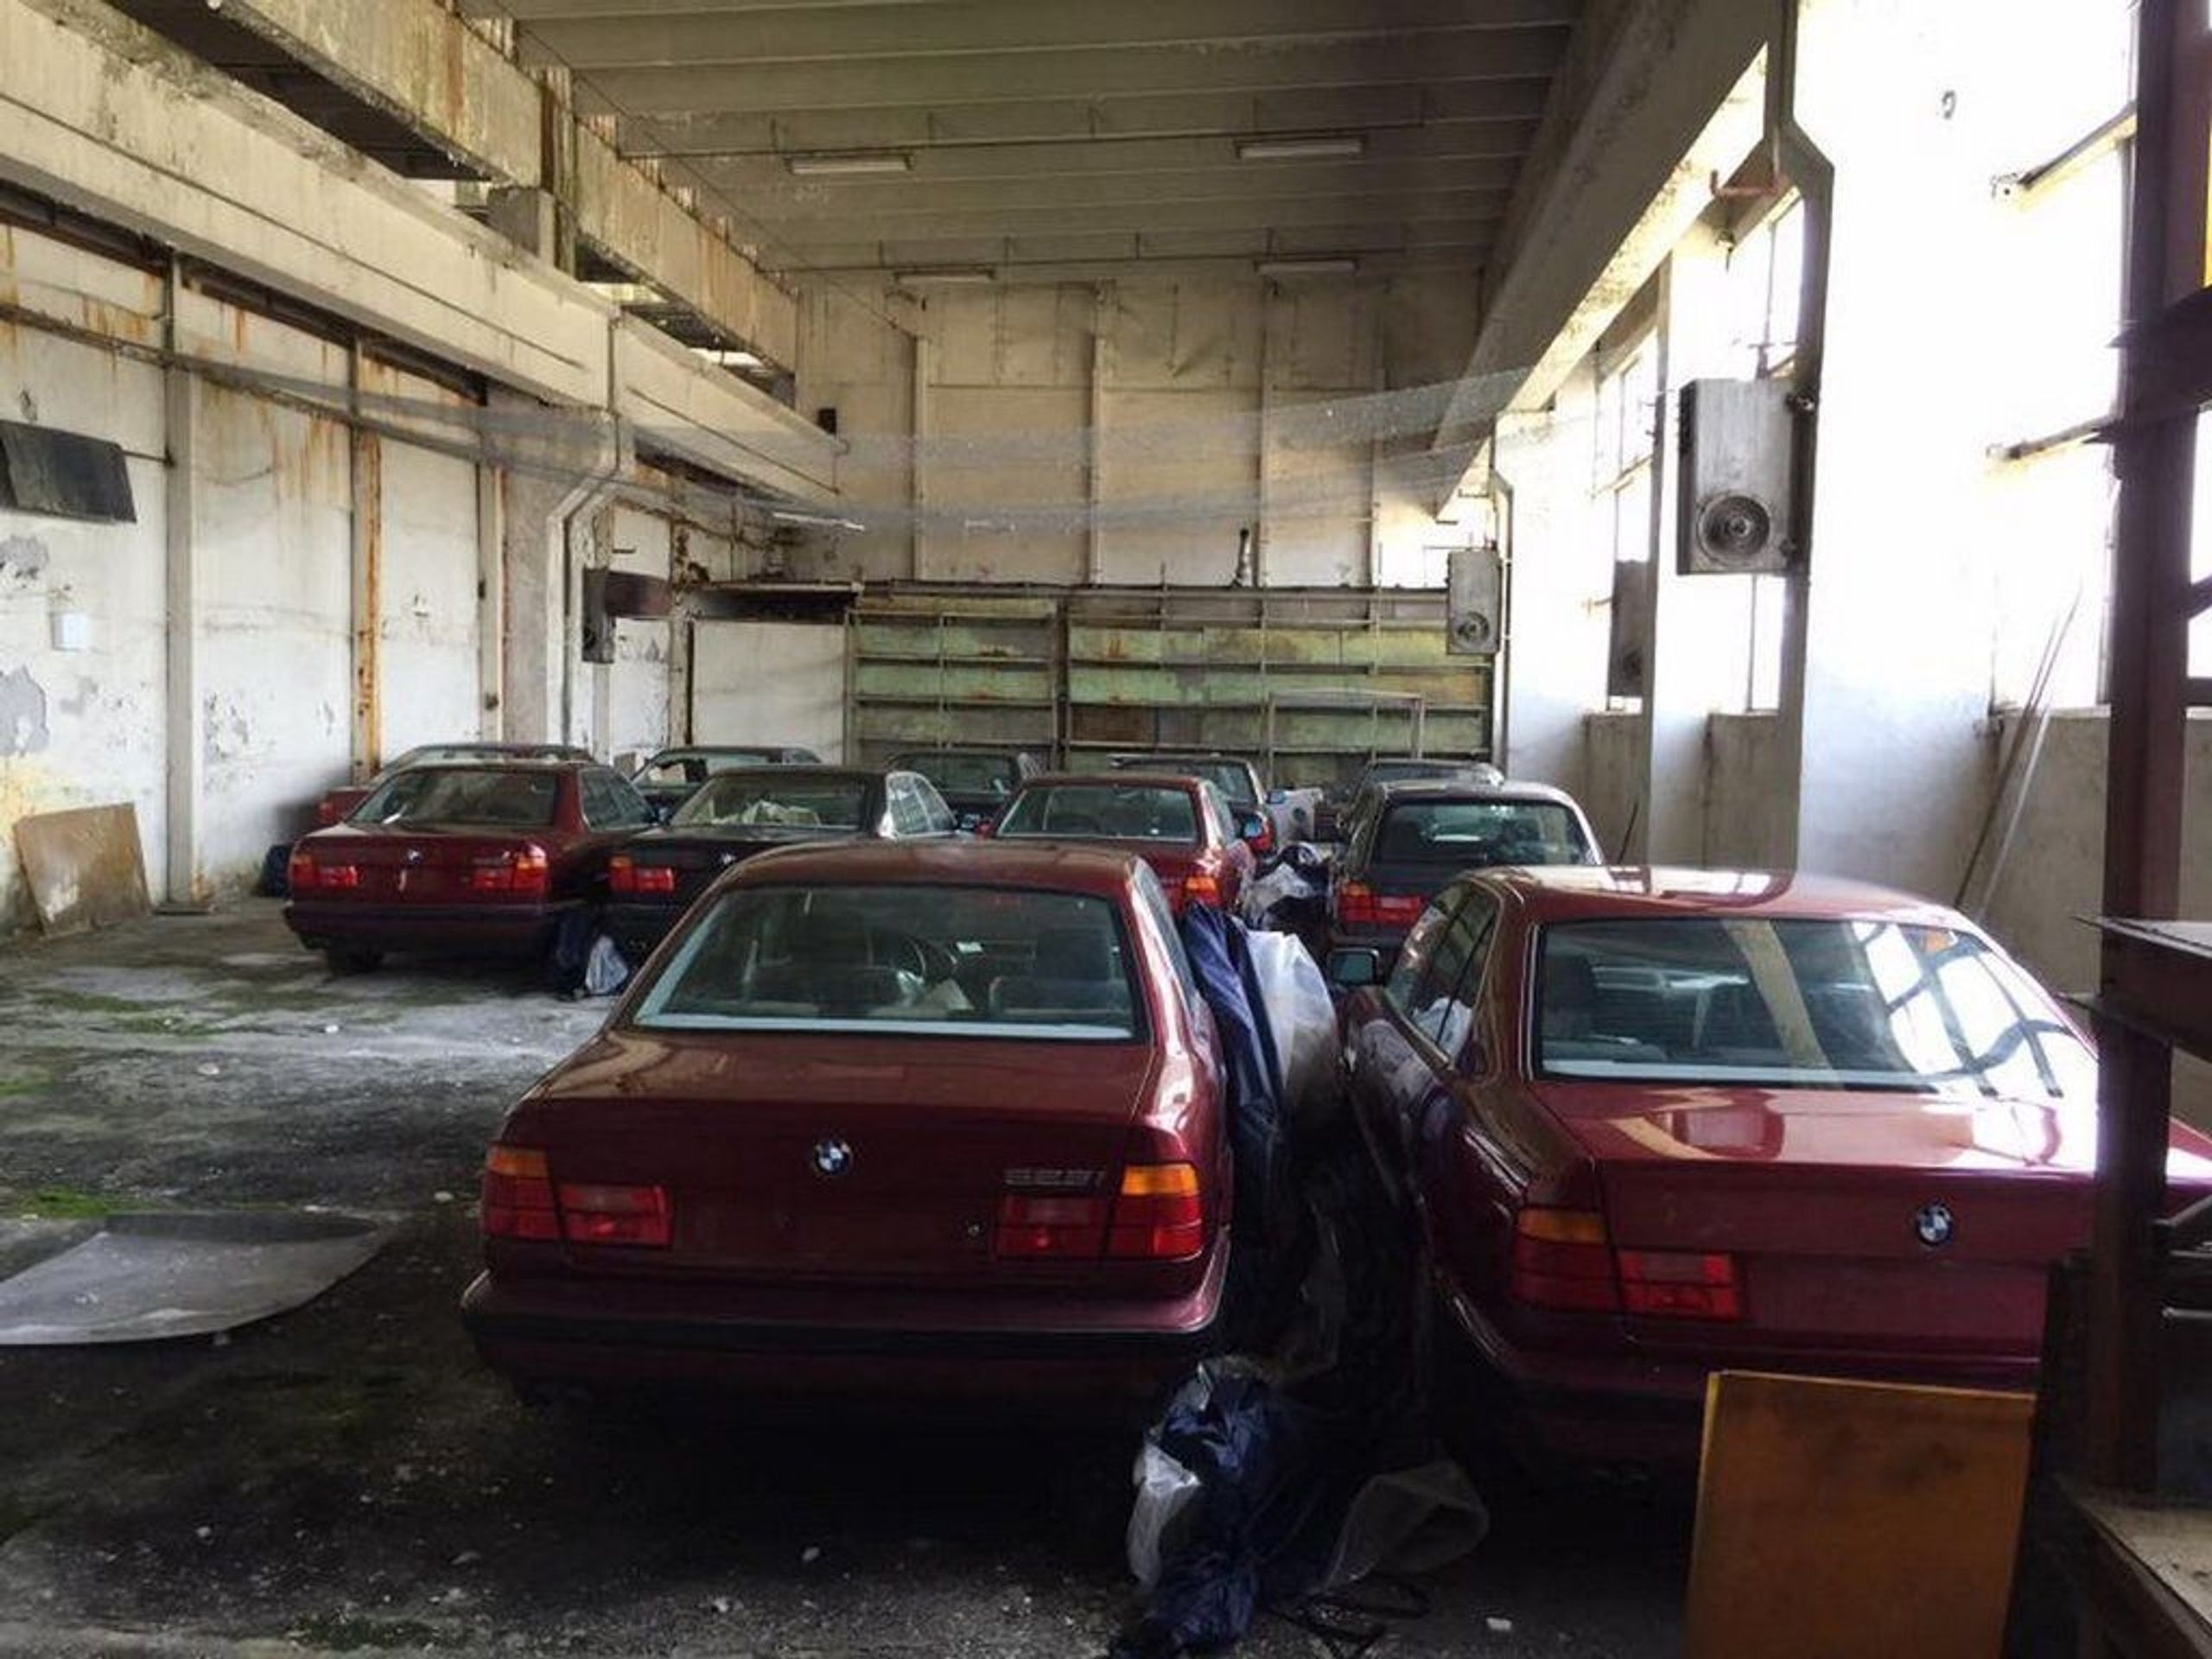 Sklad 25 let ukrýval 11 vozů BMW řady 5 - 33 - Fotogalerie: V bulharském skladu se 25 let skrýval poklad (3/16)